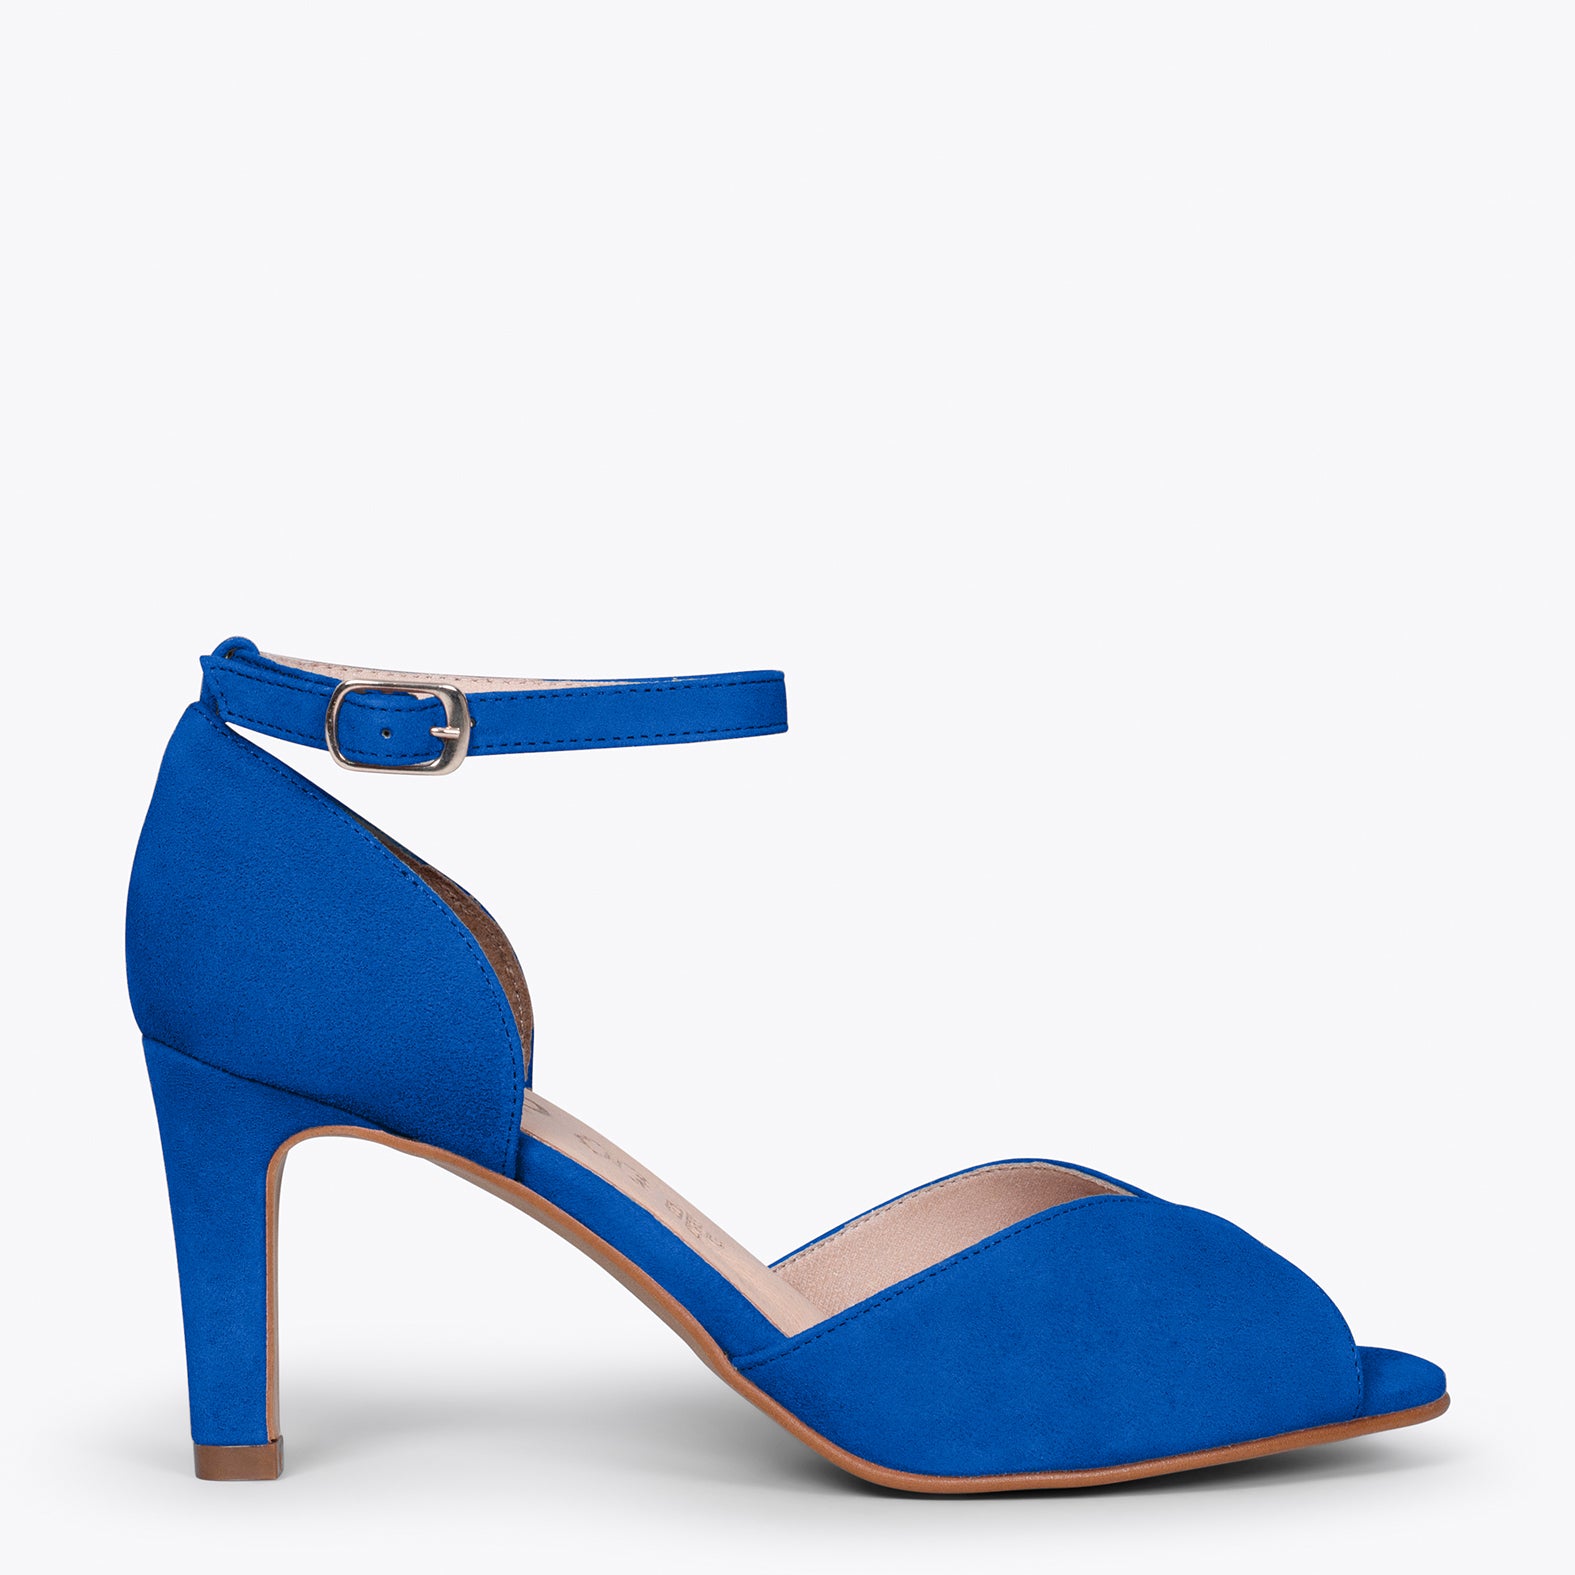 PETAL – ELECTRIC BLUE high heel sandal